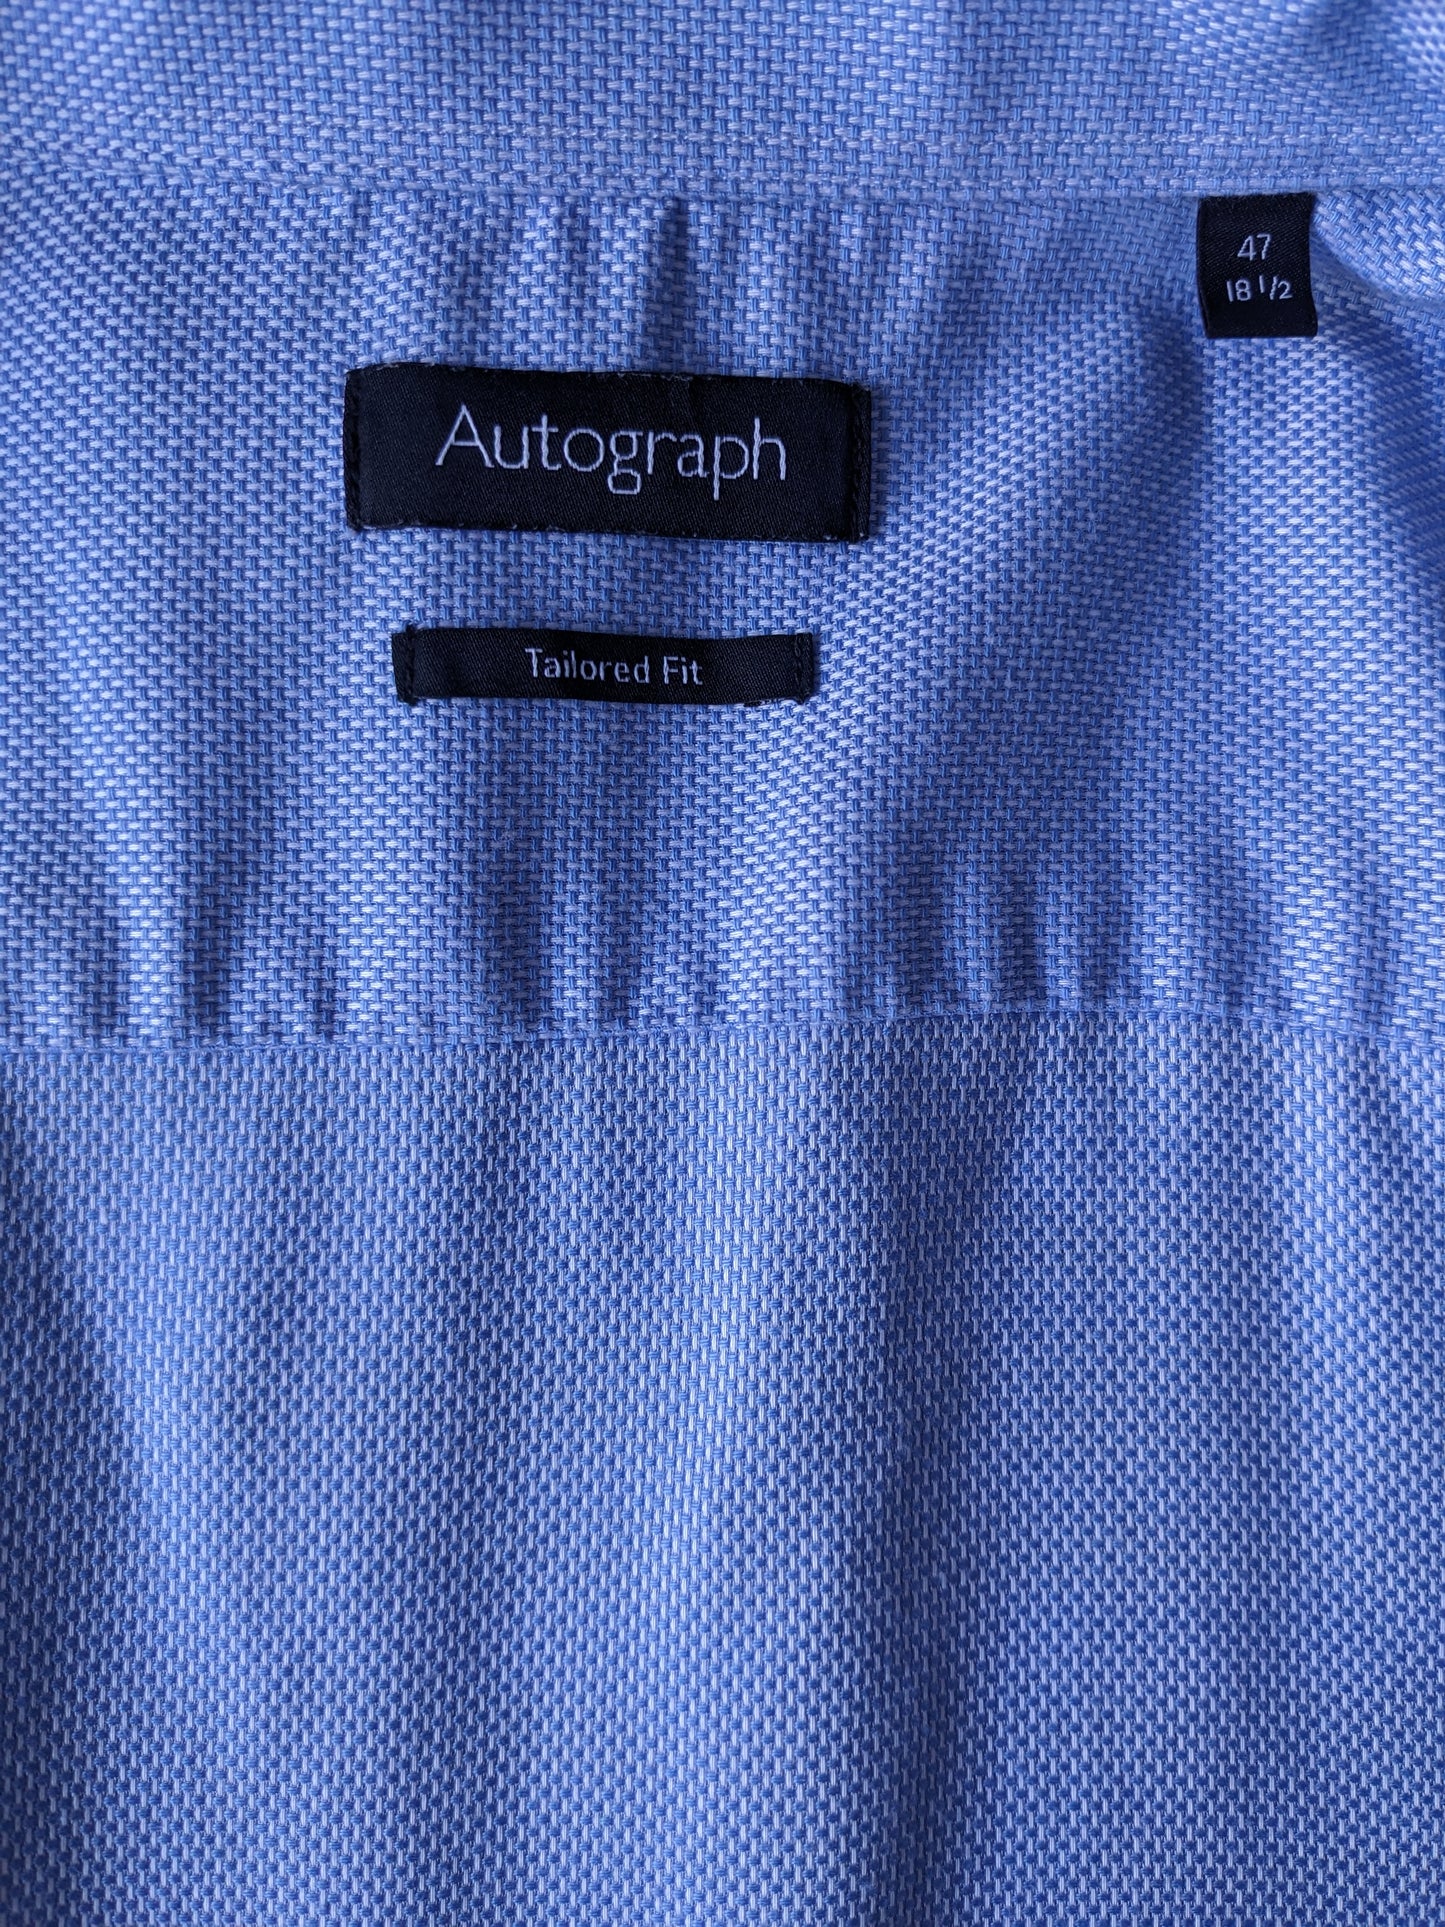 Autograph overhemd. Blauw Wit motief. Maat 47 / 2XL-XXL. Tailored fit.